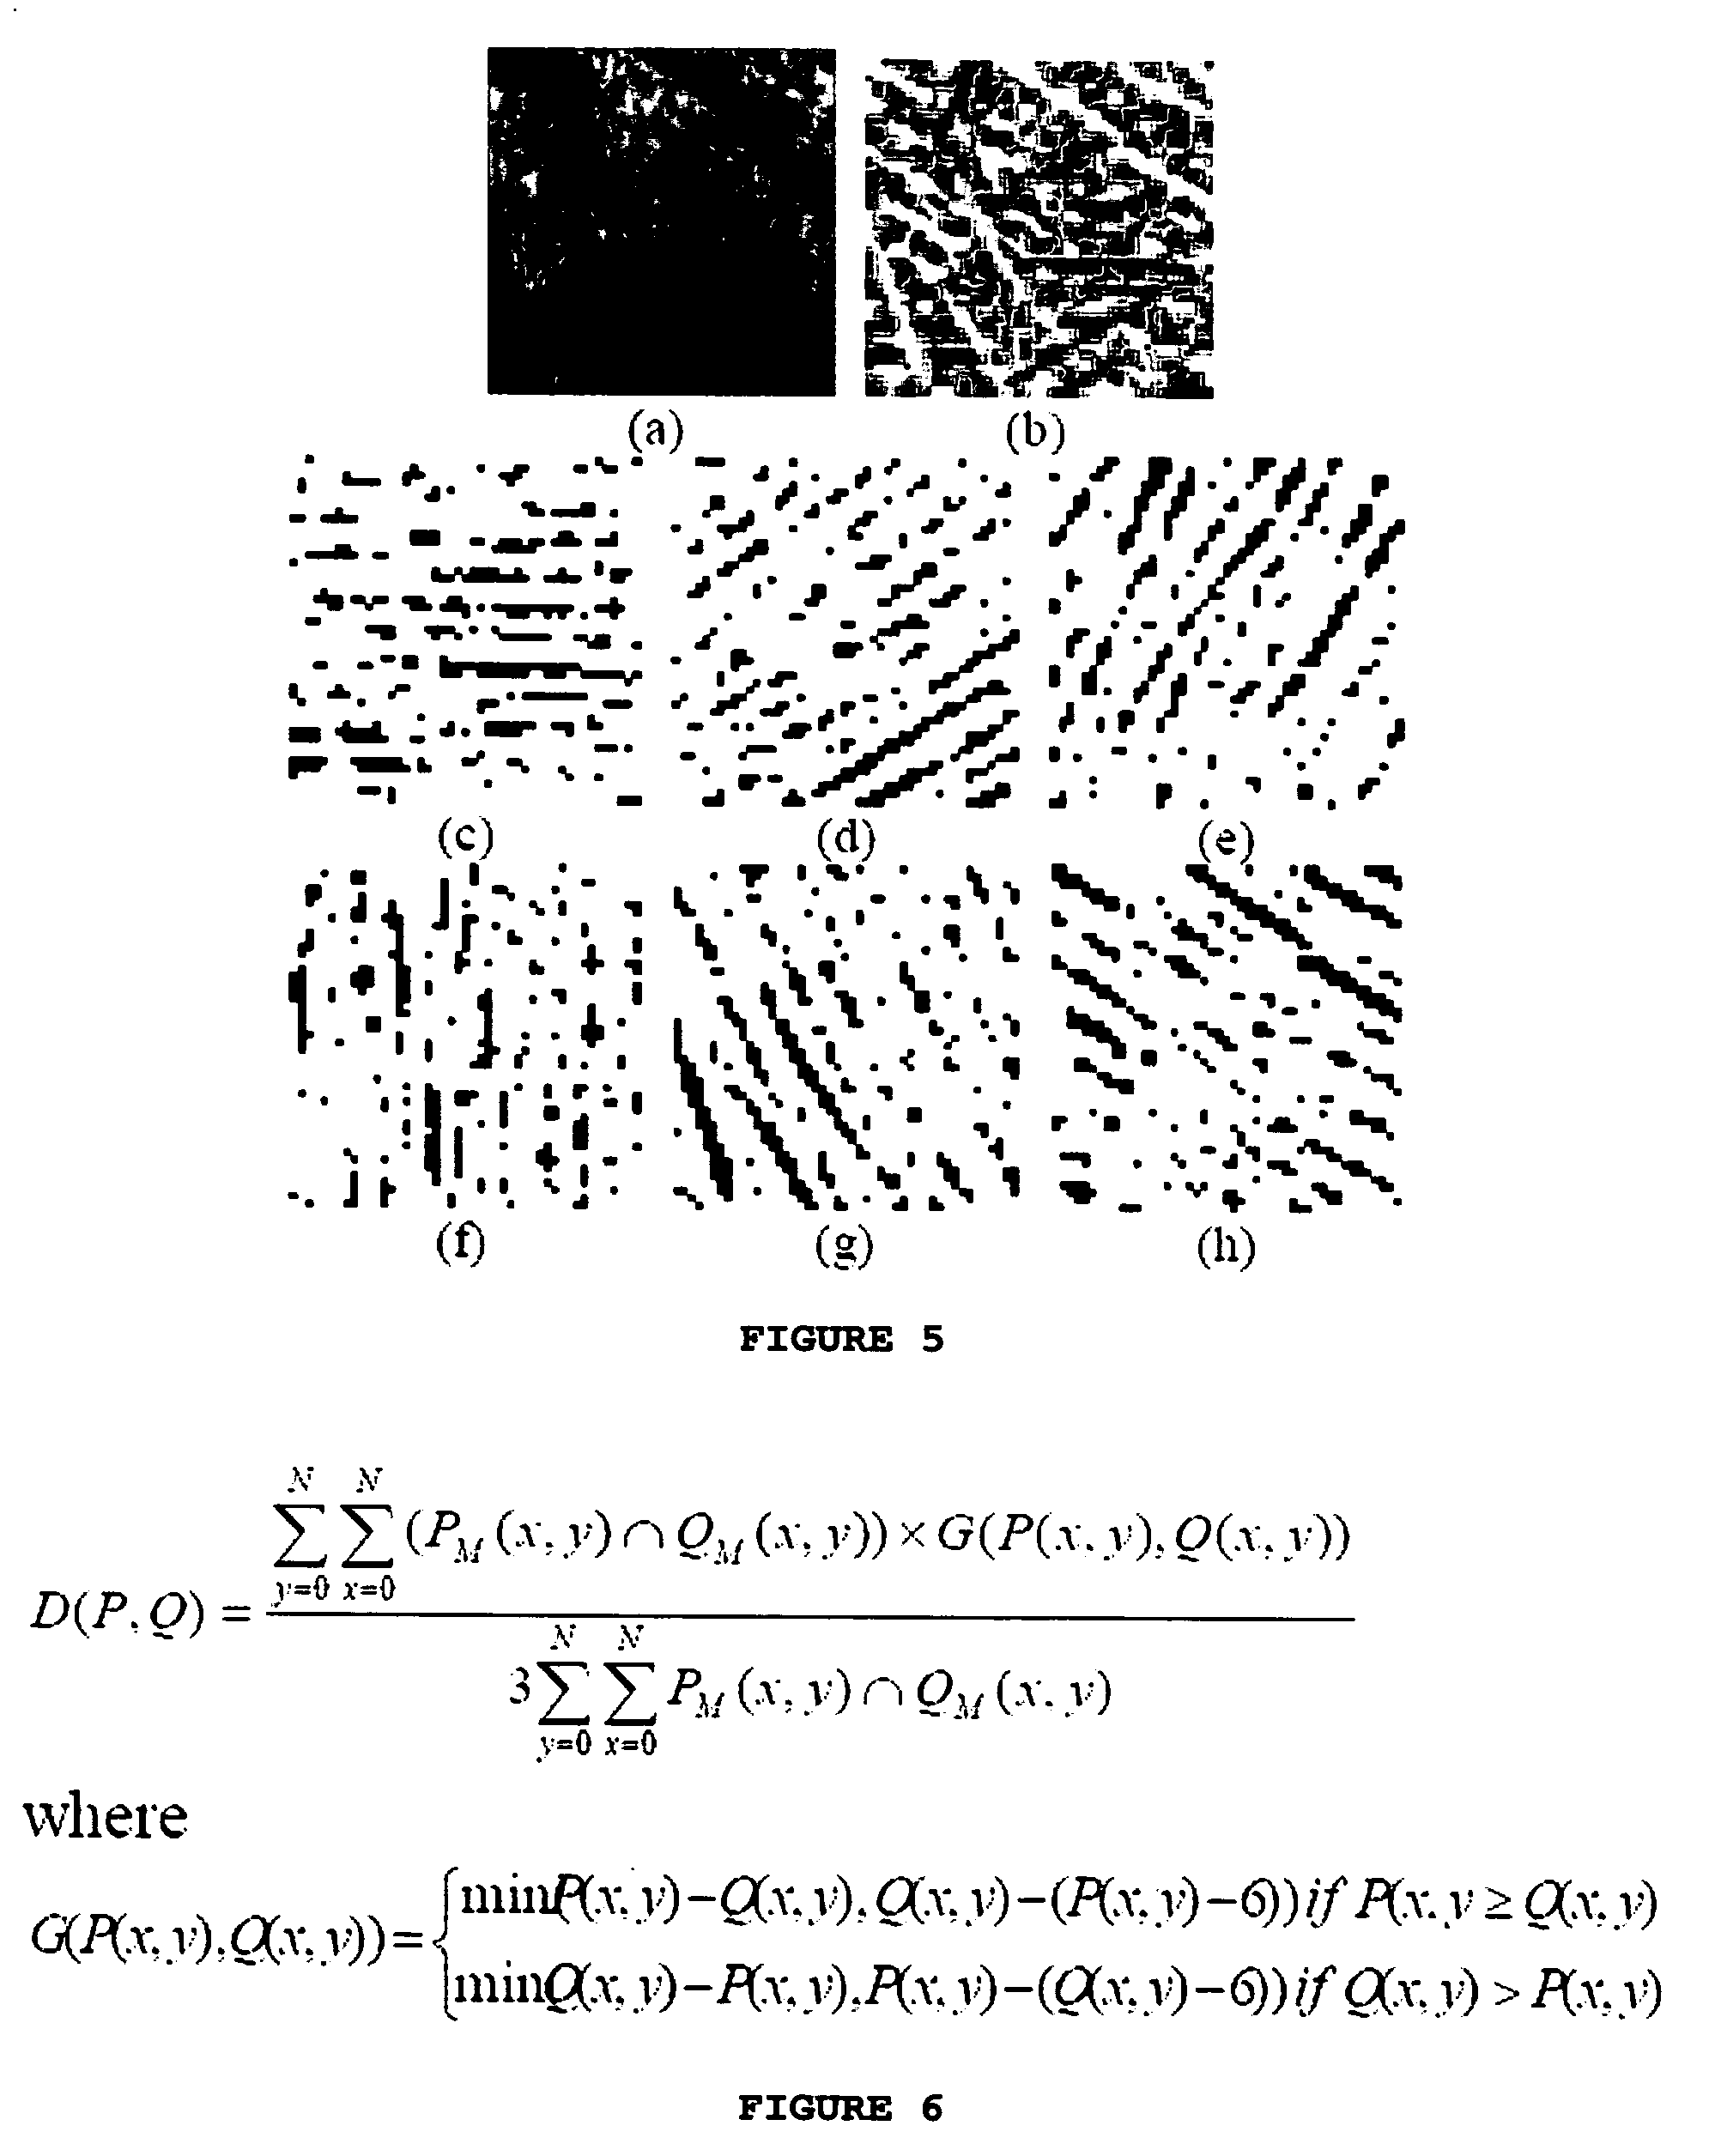 Palm print identification using palm line orientation